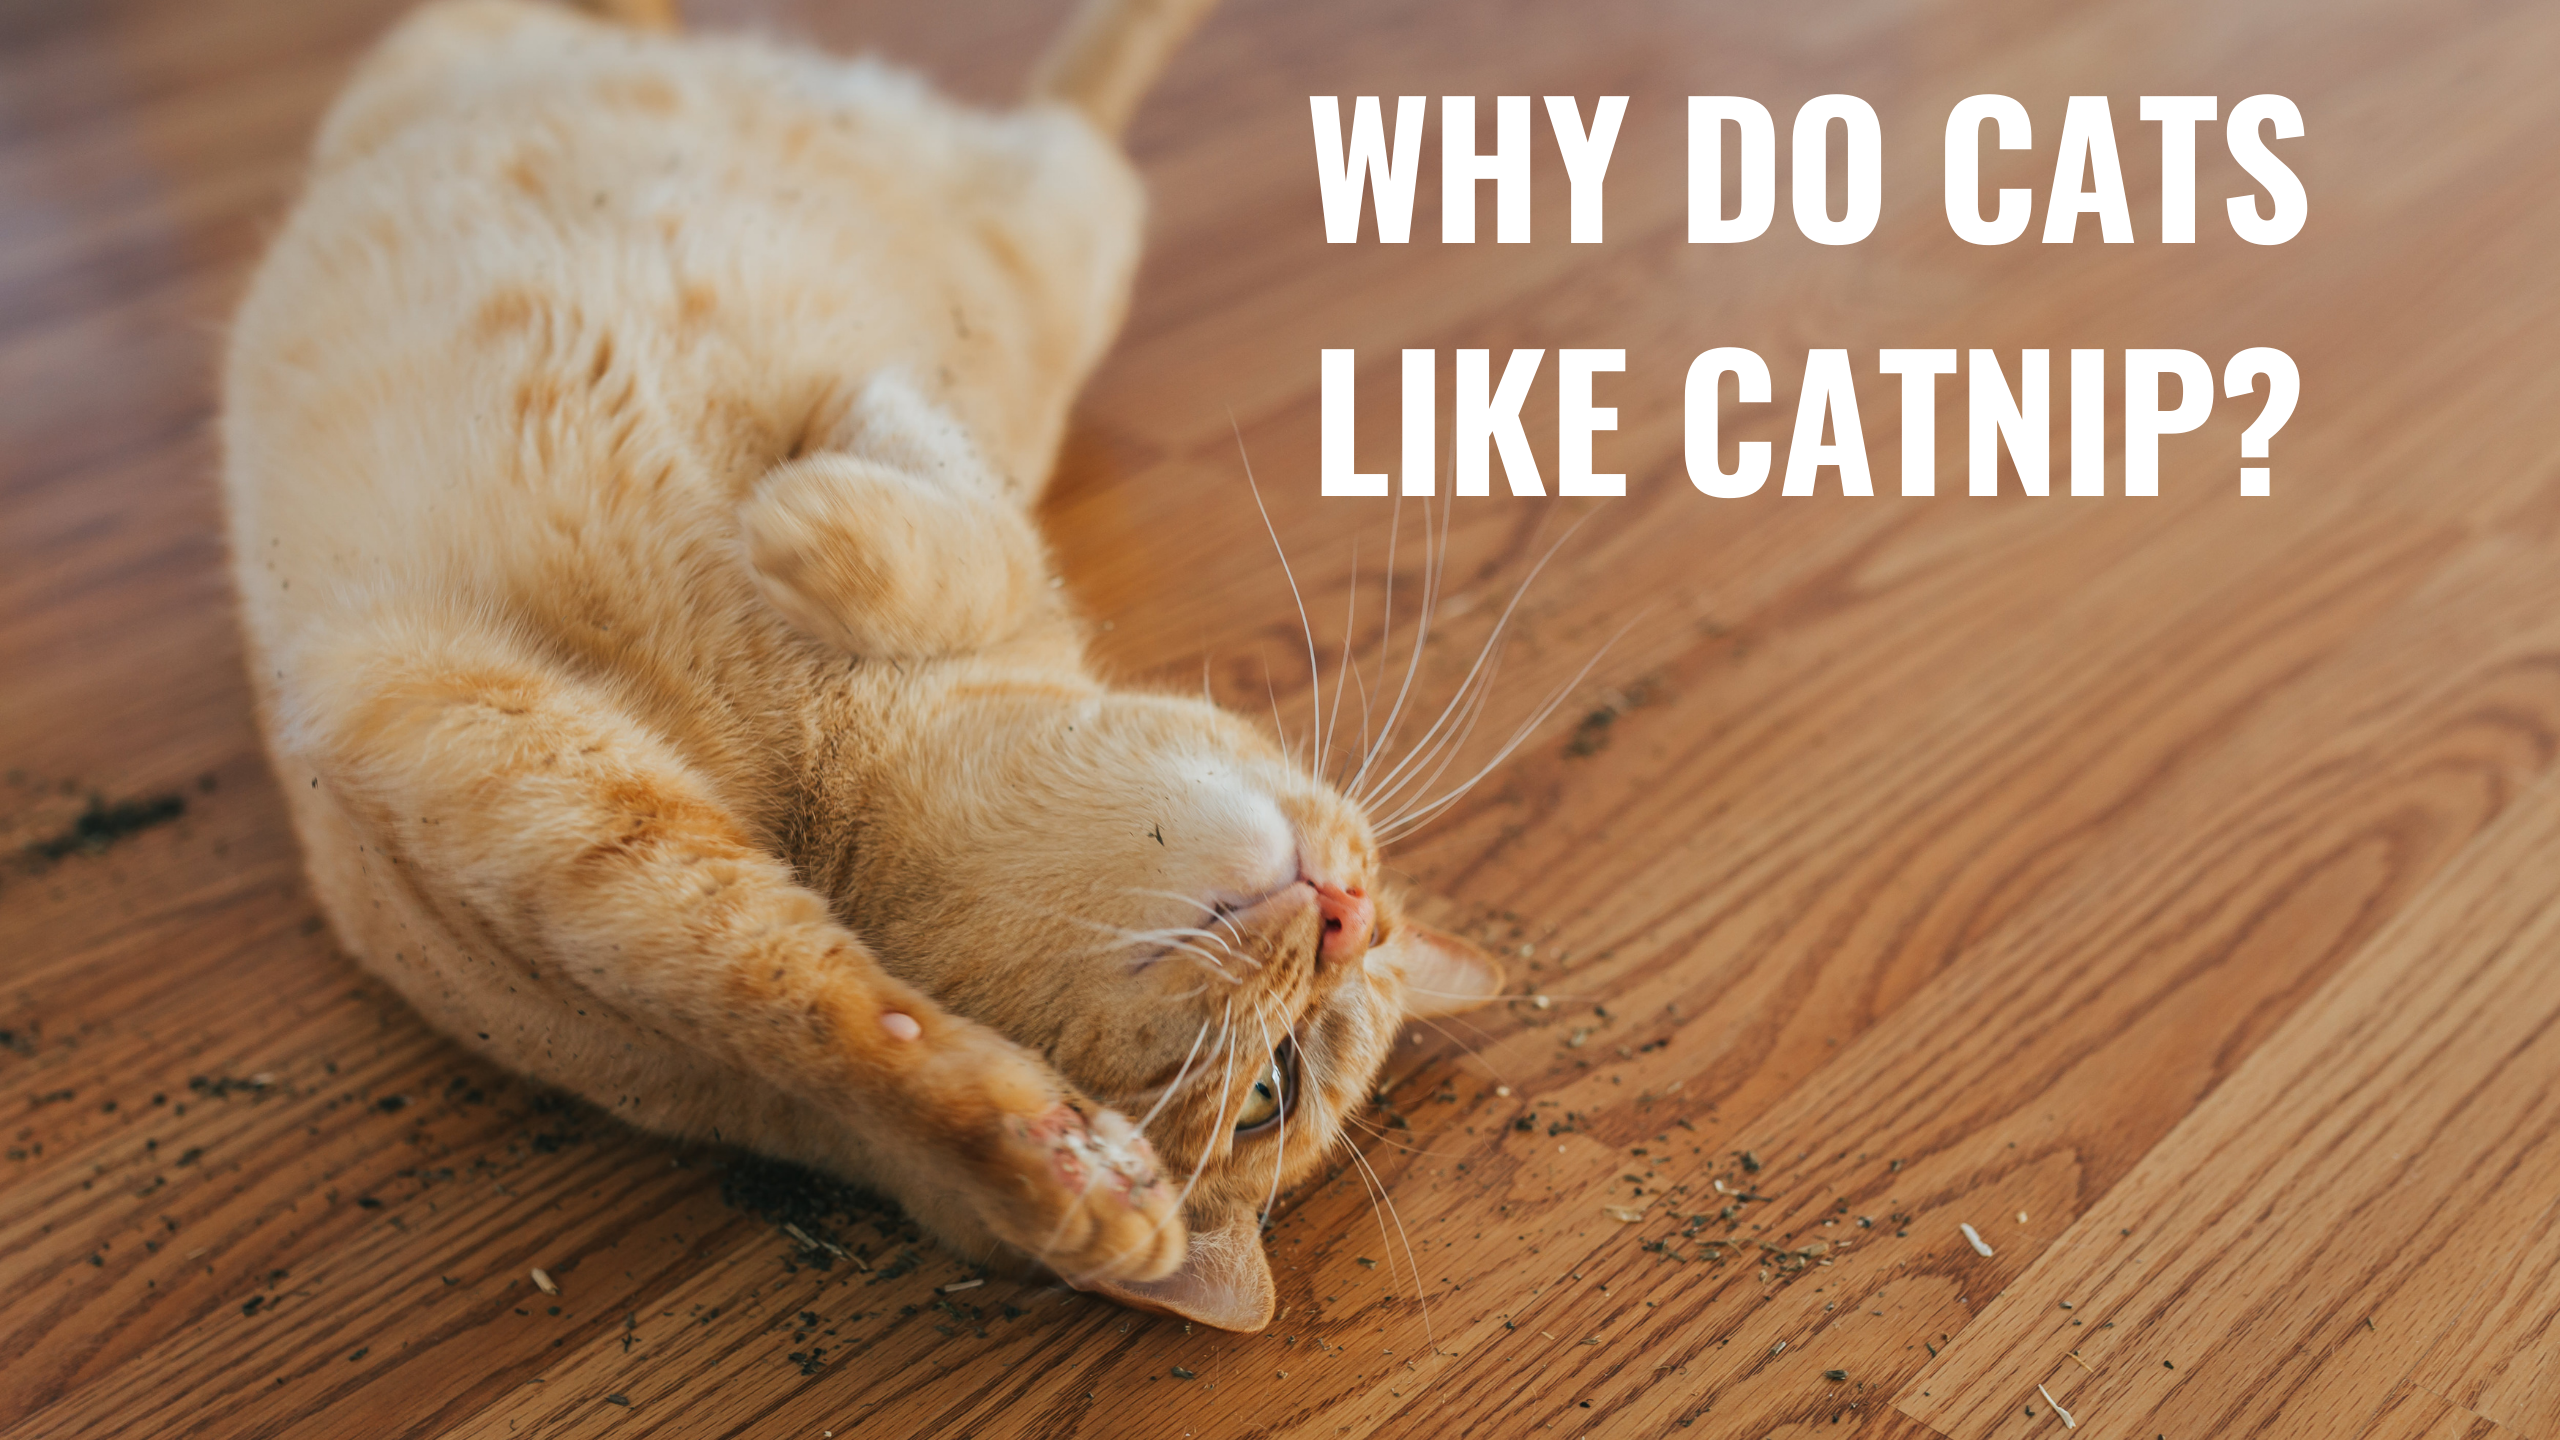 Why do cats like catnip?